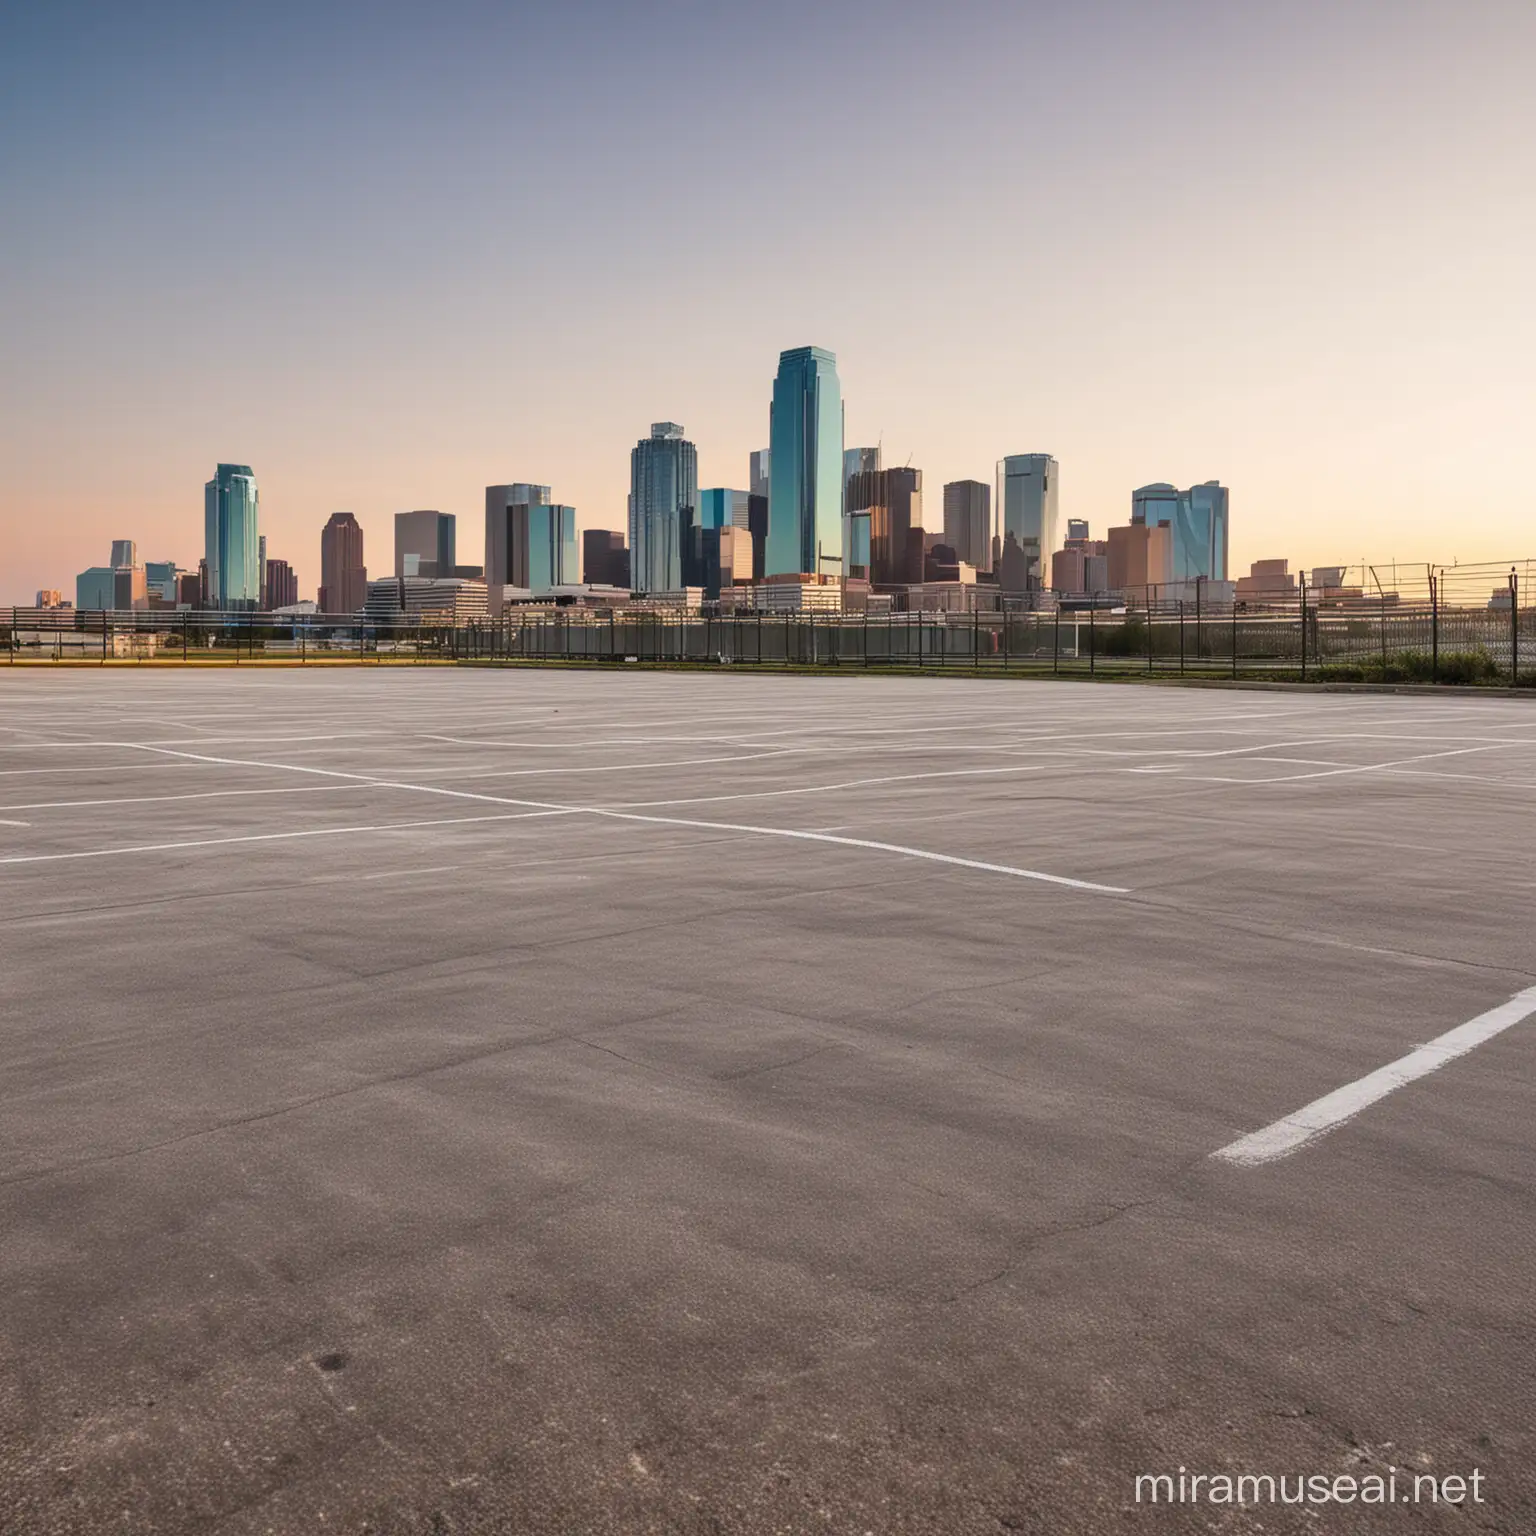 Dallas Texas Skyline Over Empty Parking Lot